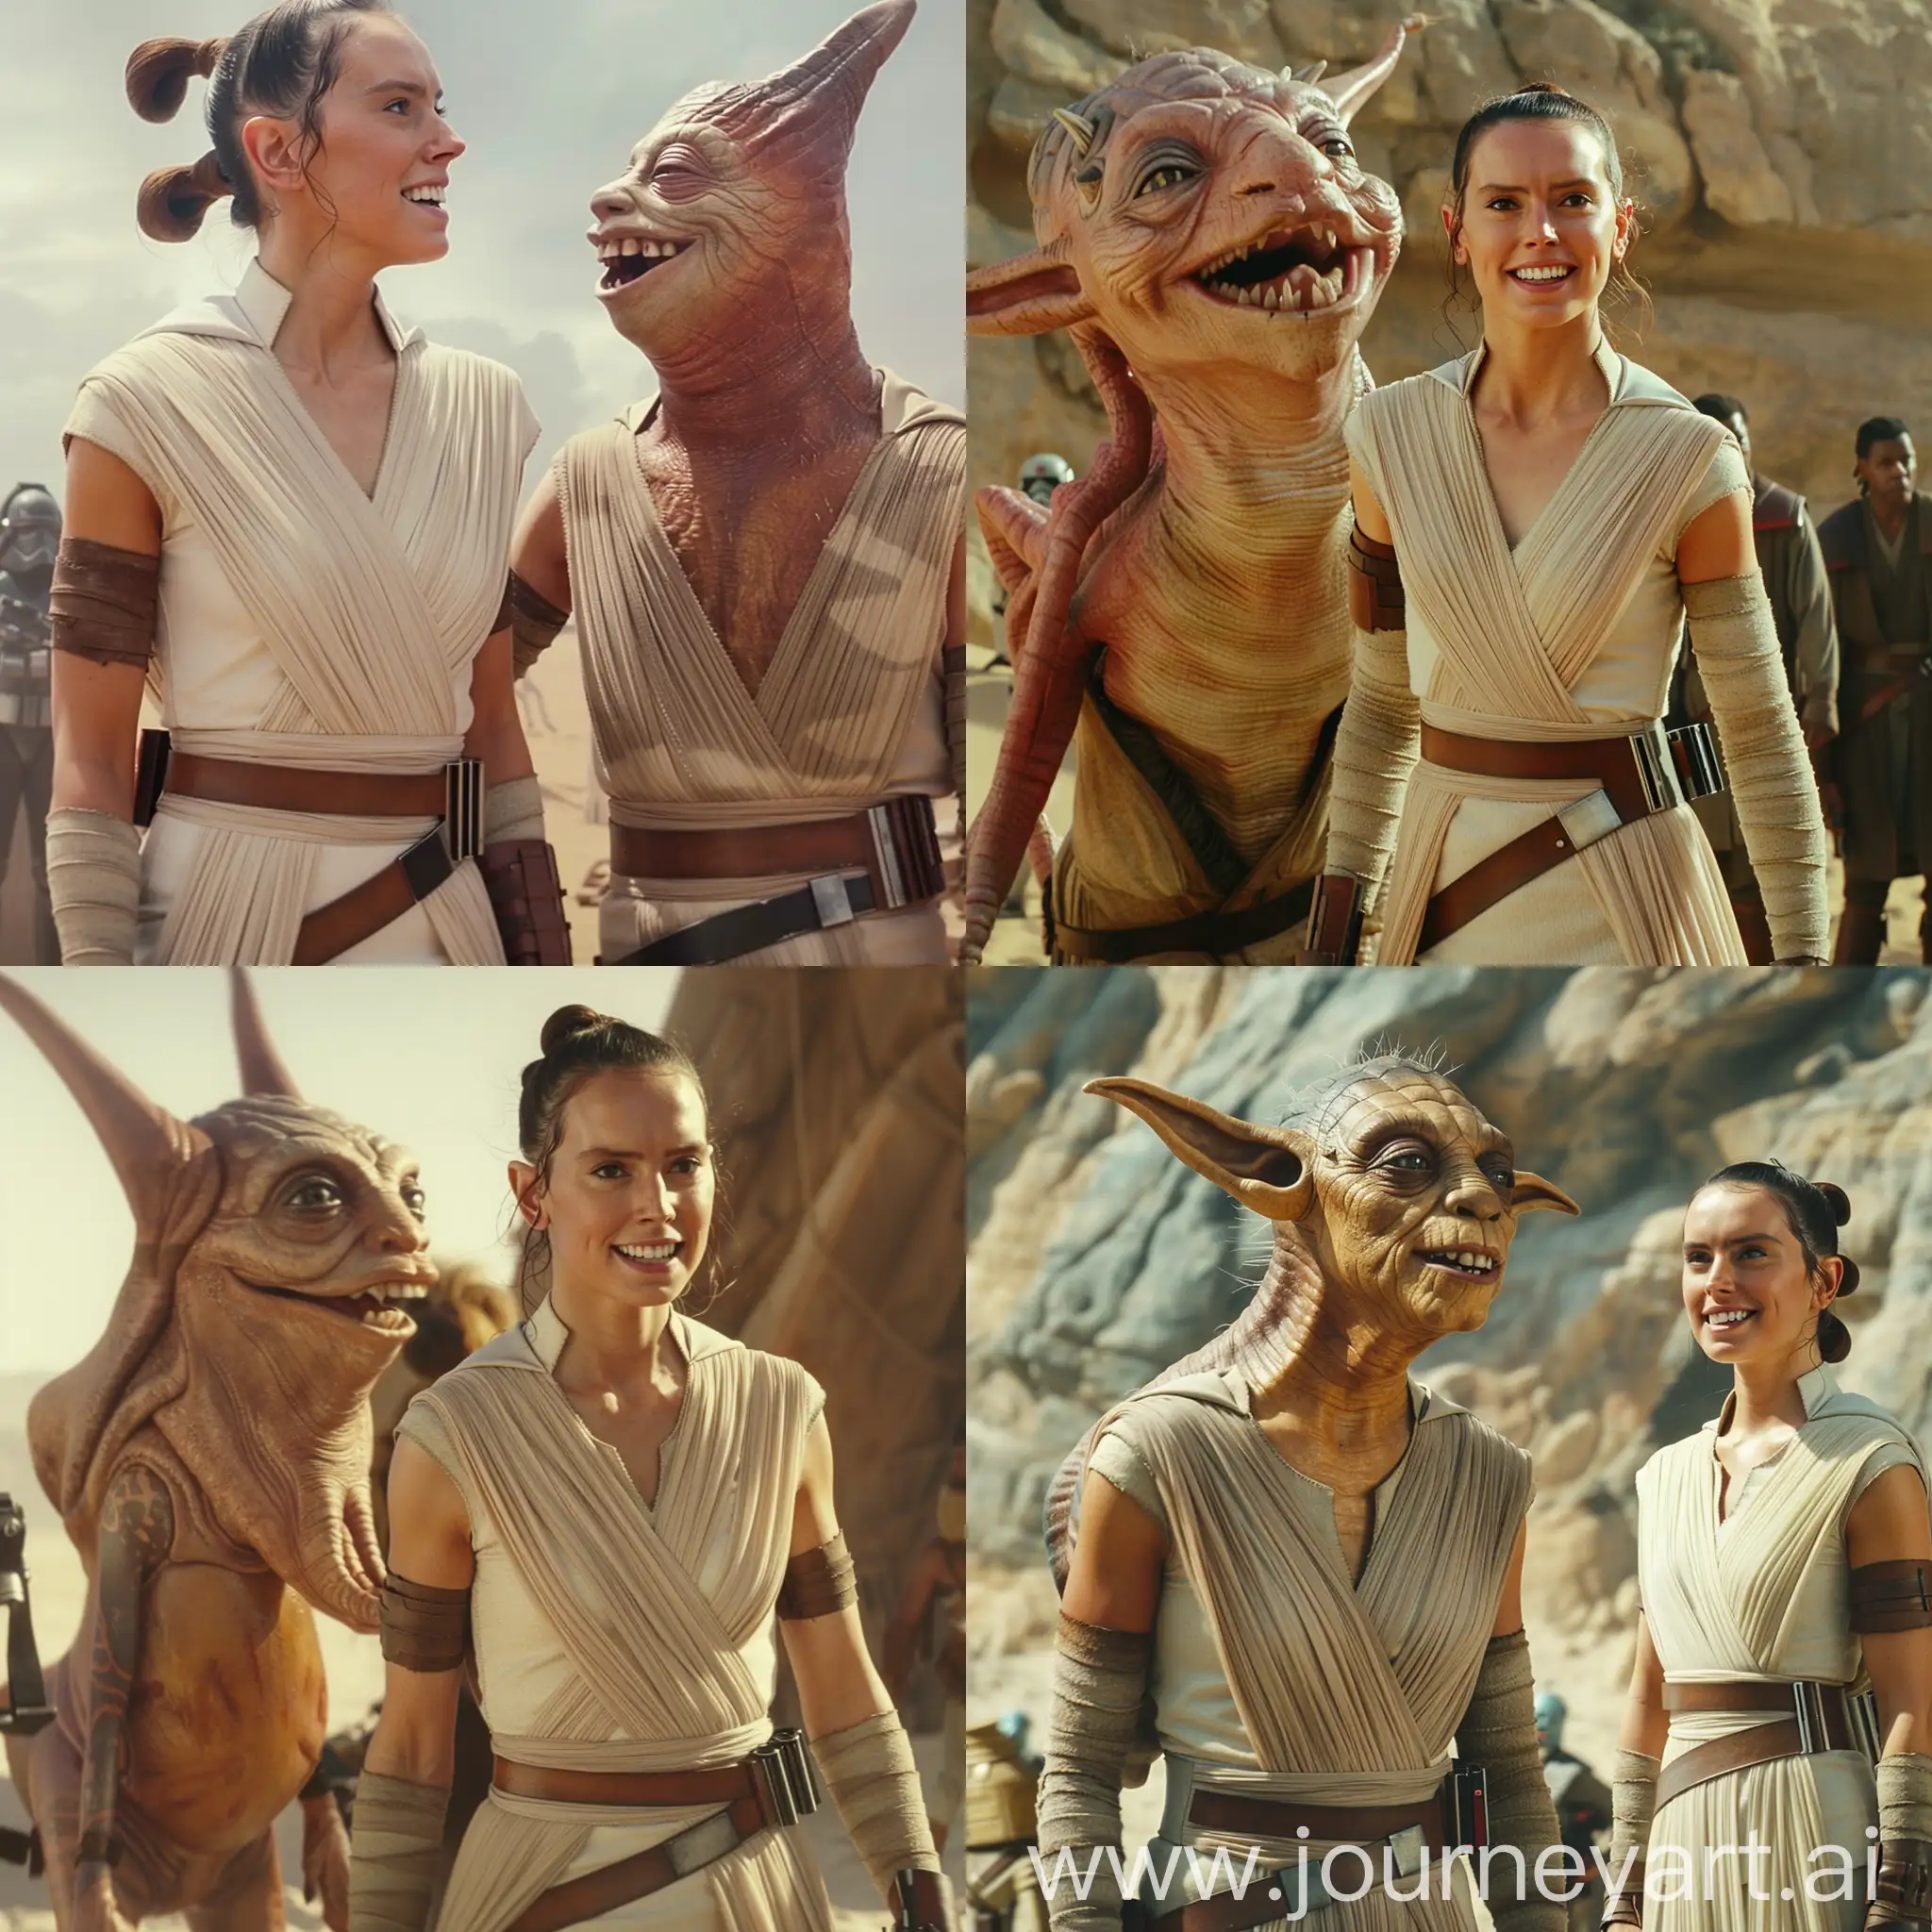 Rey-Skywalker-and-Jar-Jar-Binks-Celebrating-Cinematic-Still-from-Star-Wars